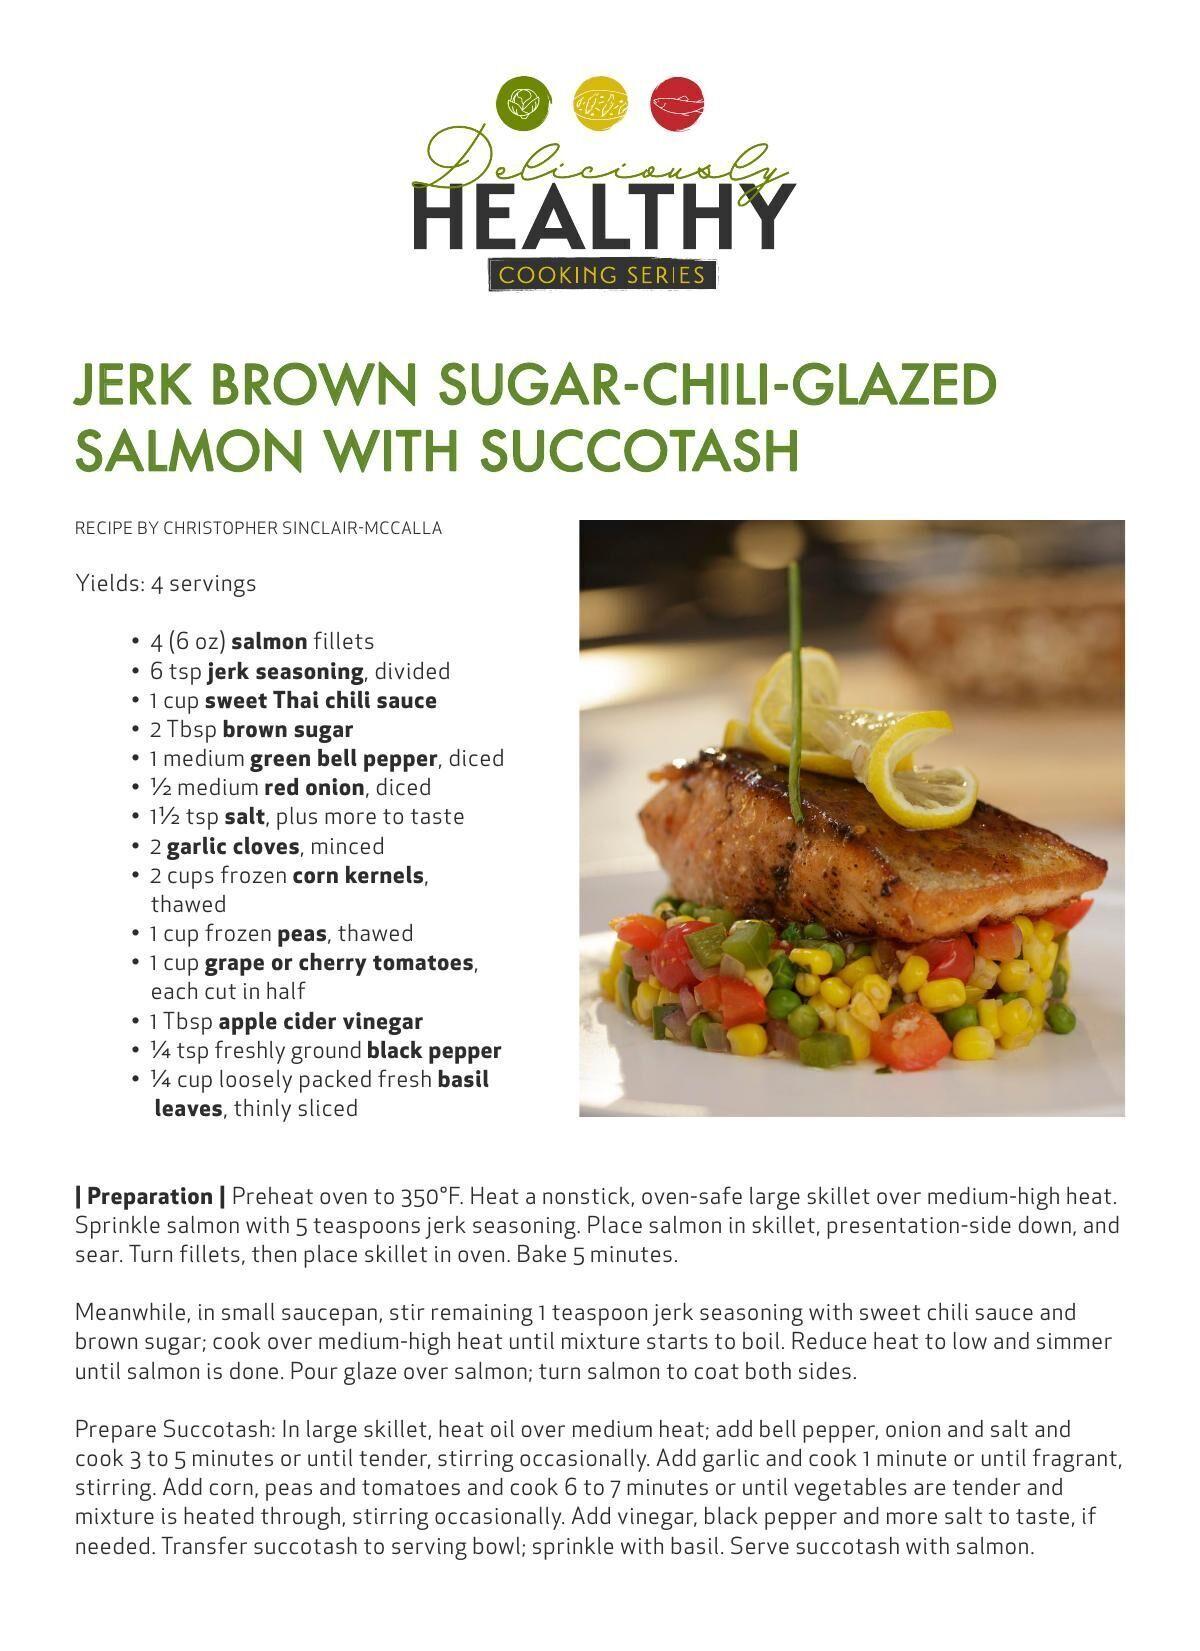 Download the jerk brown sugar-chili-glazed salmon with succotash recipe